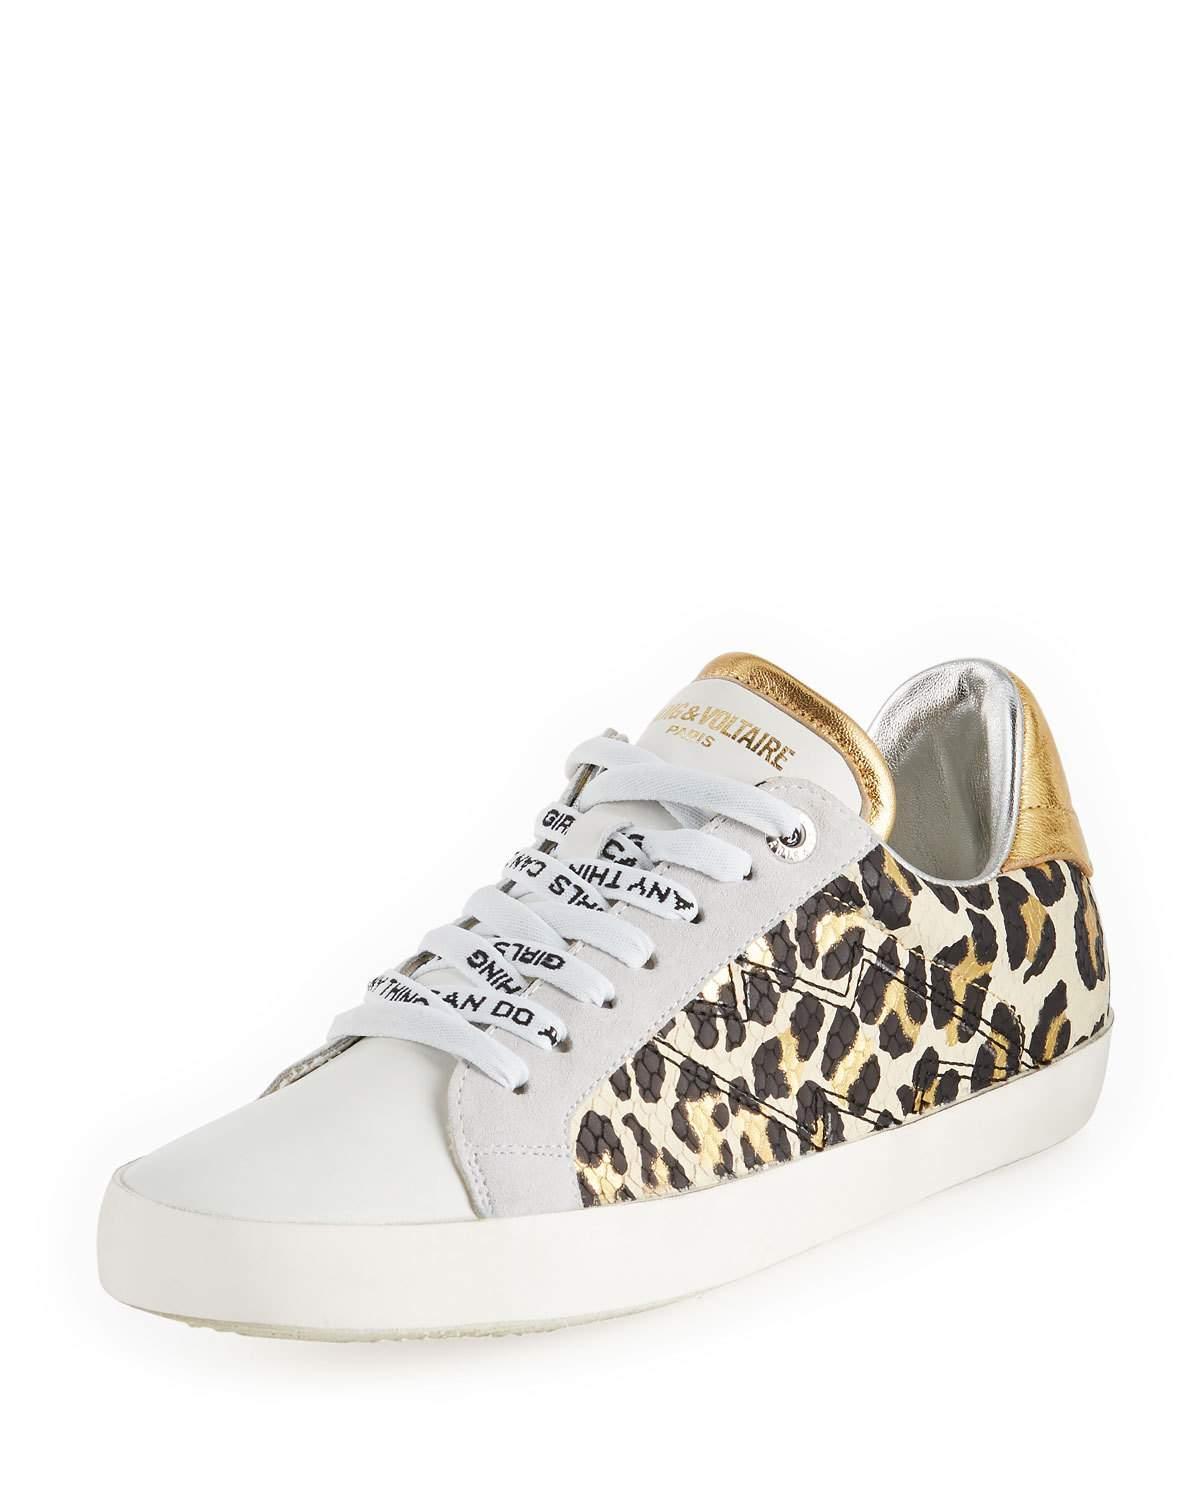 Zadig & Voltaire Suede Leo Wild Platform Sneakers in Leopard (White ...